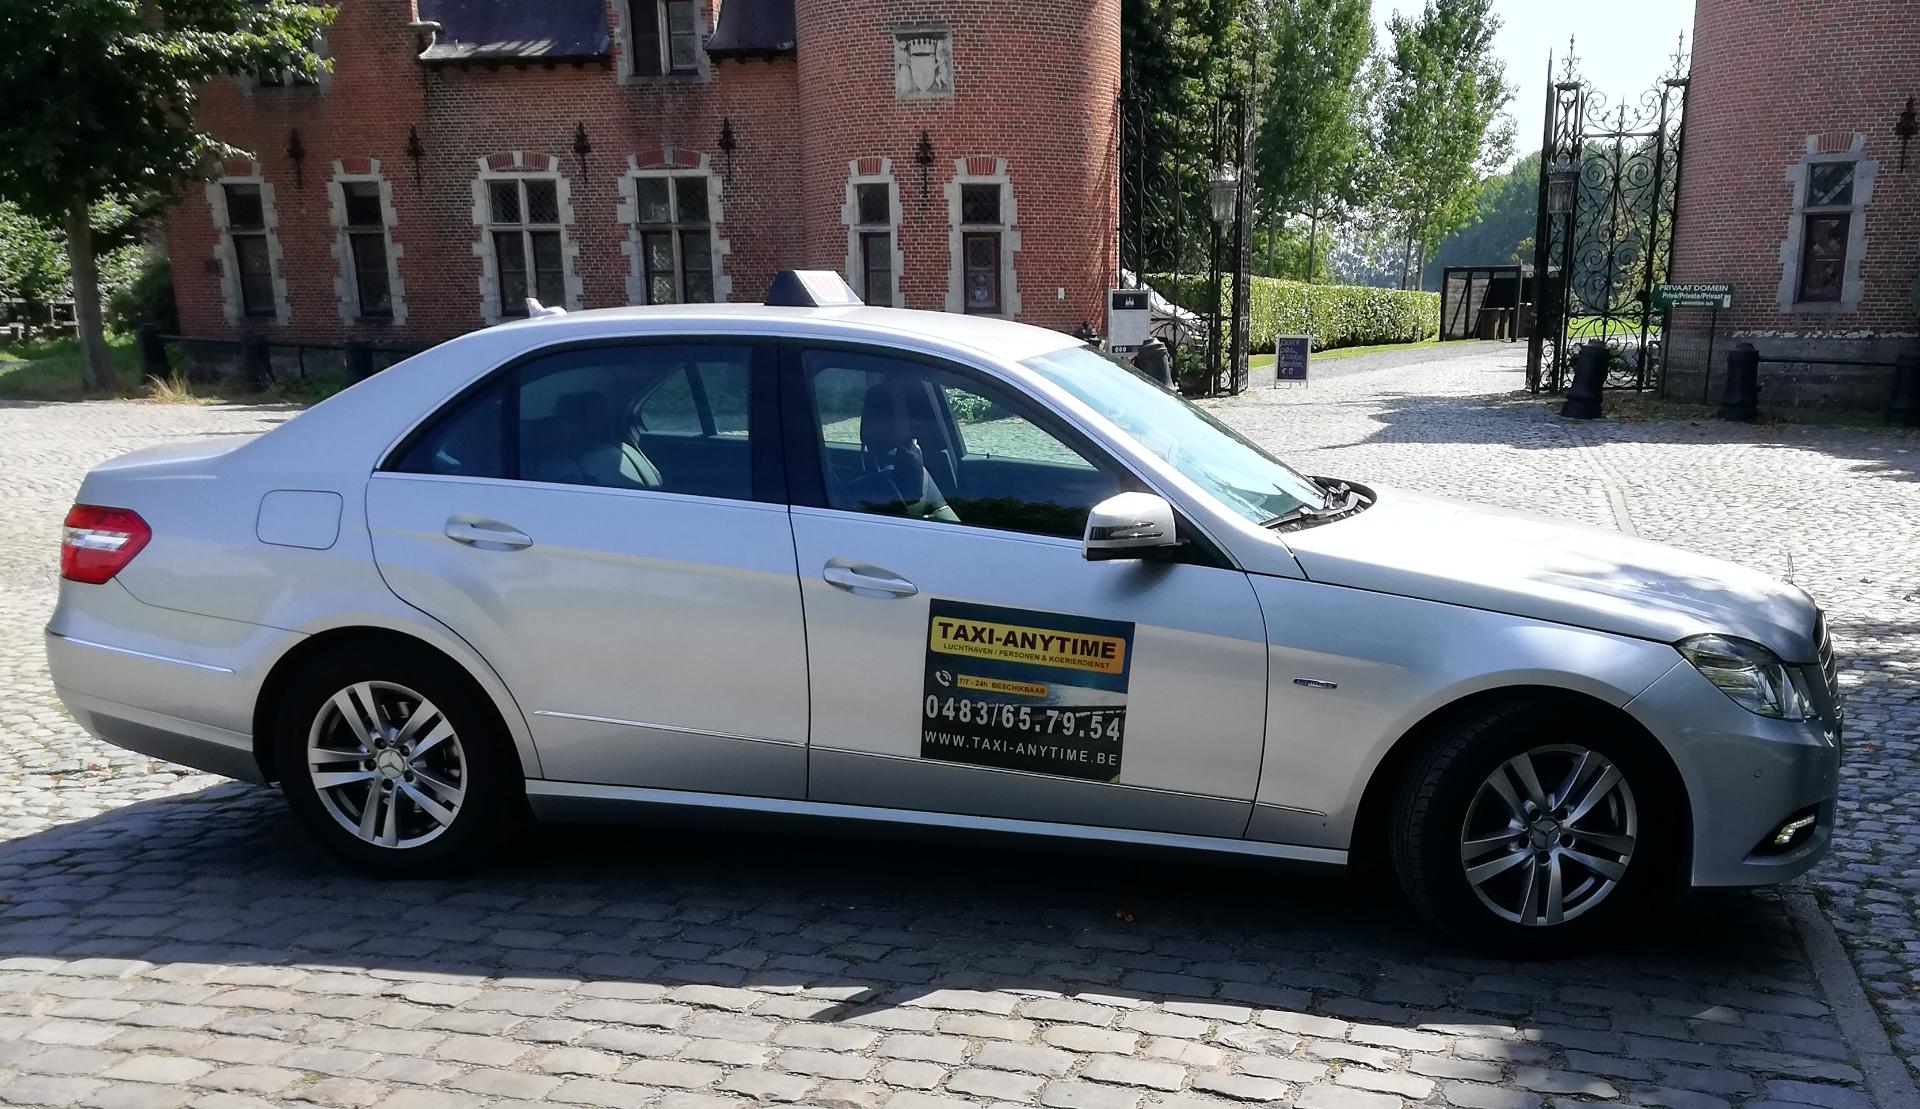 taxibedrijven met luchthavenvervoer Liedekerke Taxi Anytime